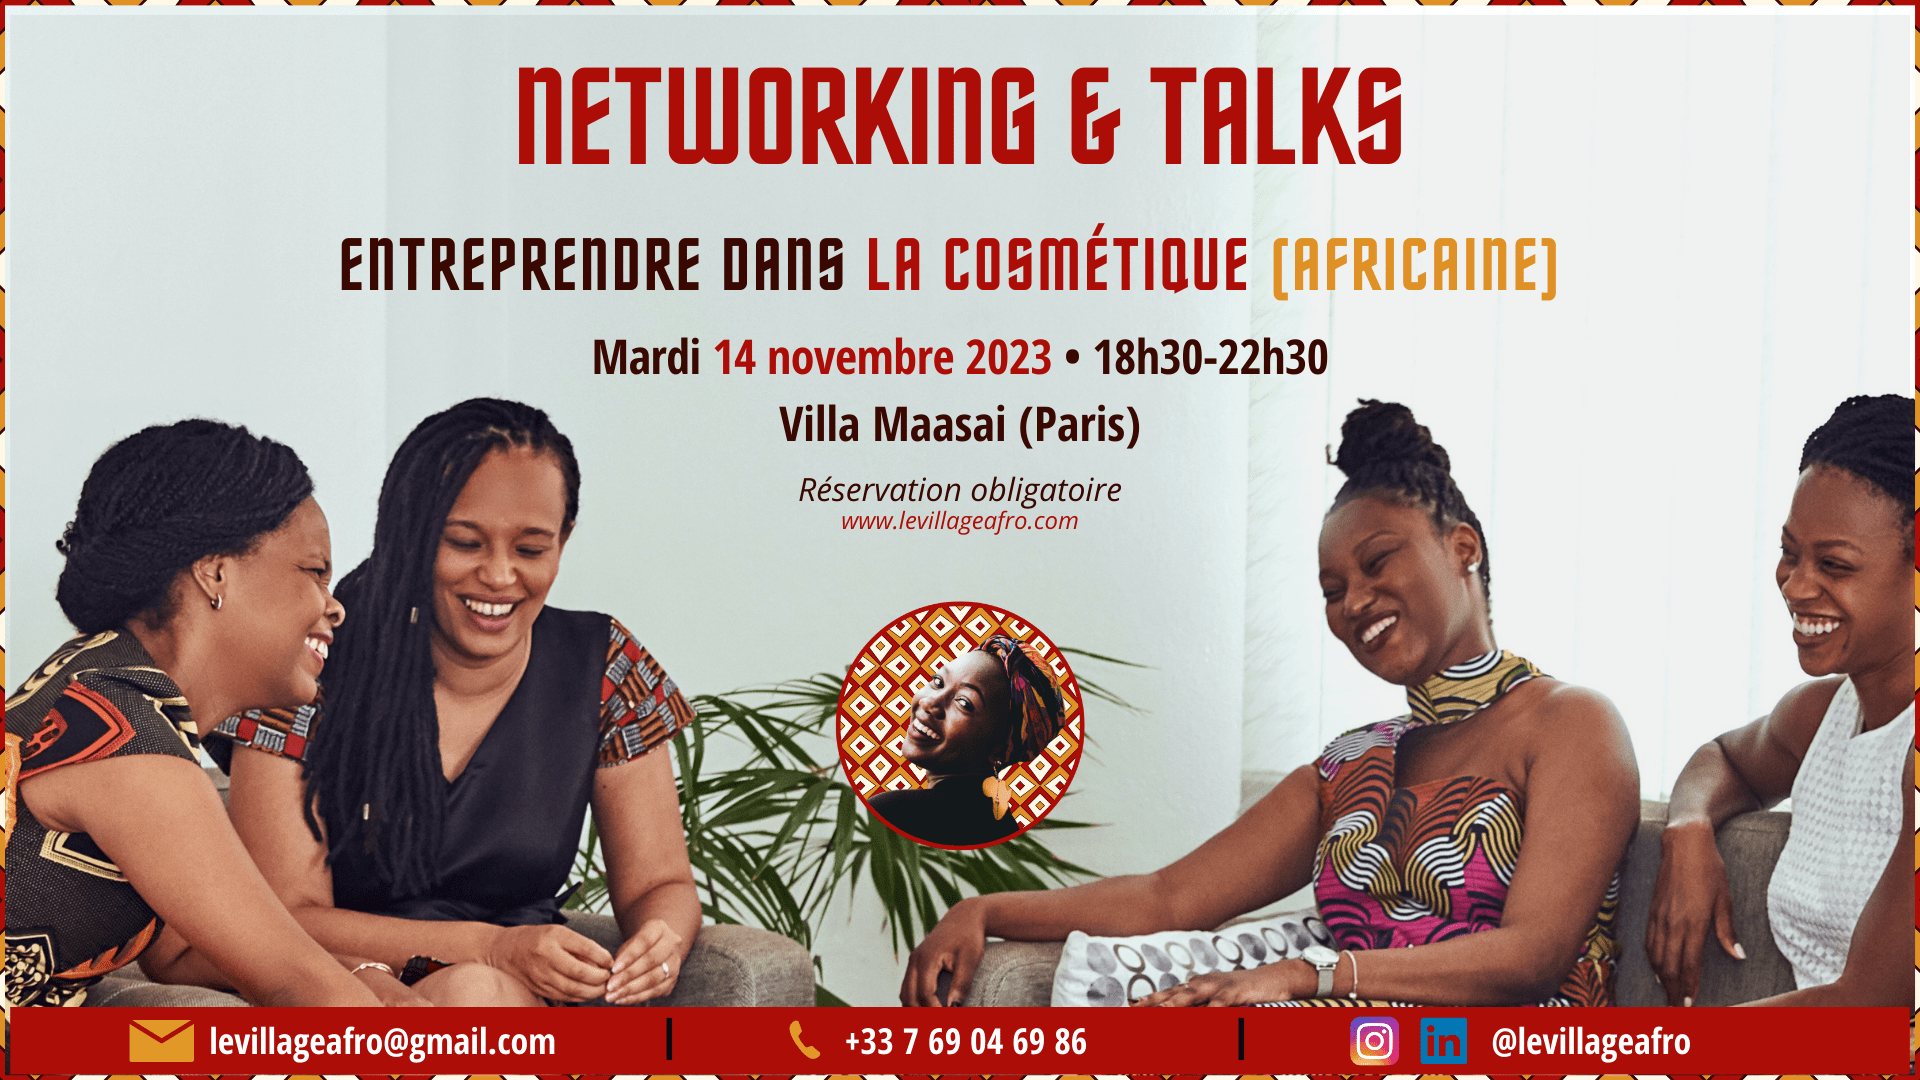 Networking & Talks - Cosmétique africaine